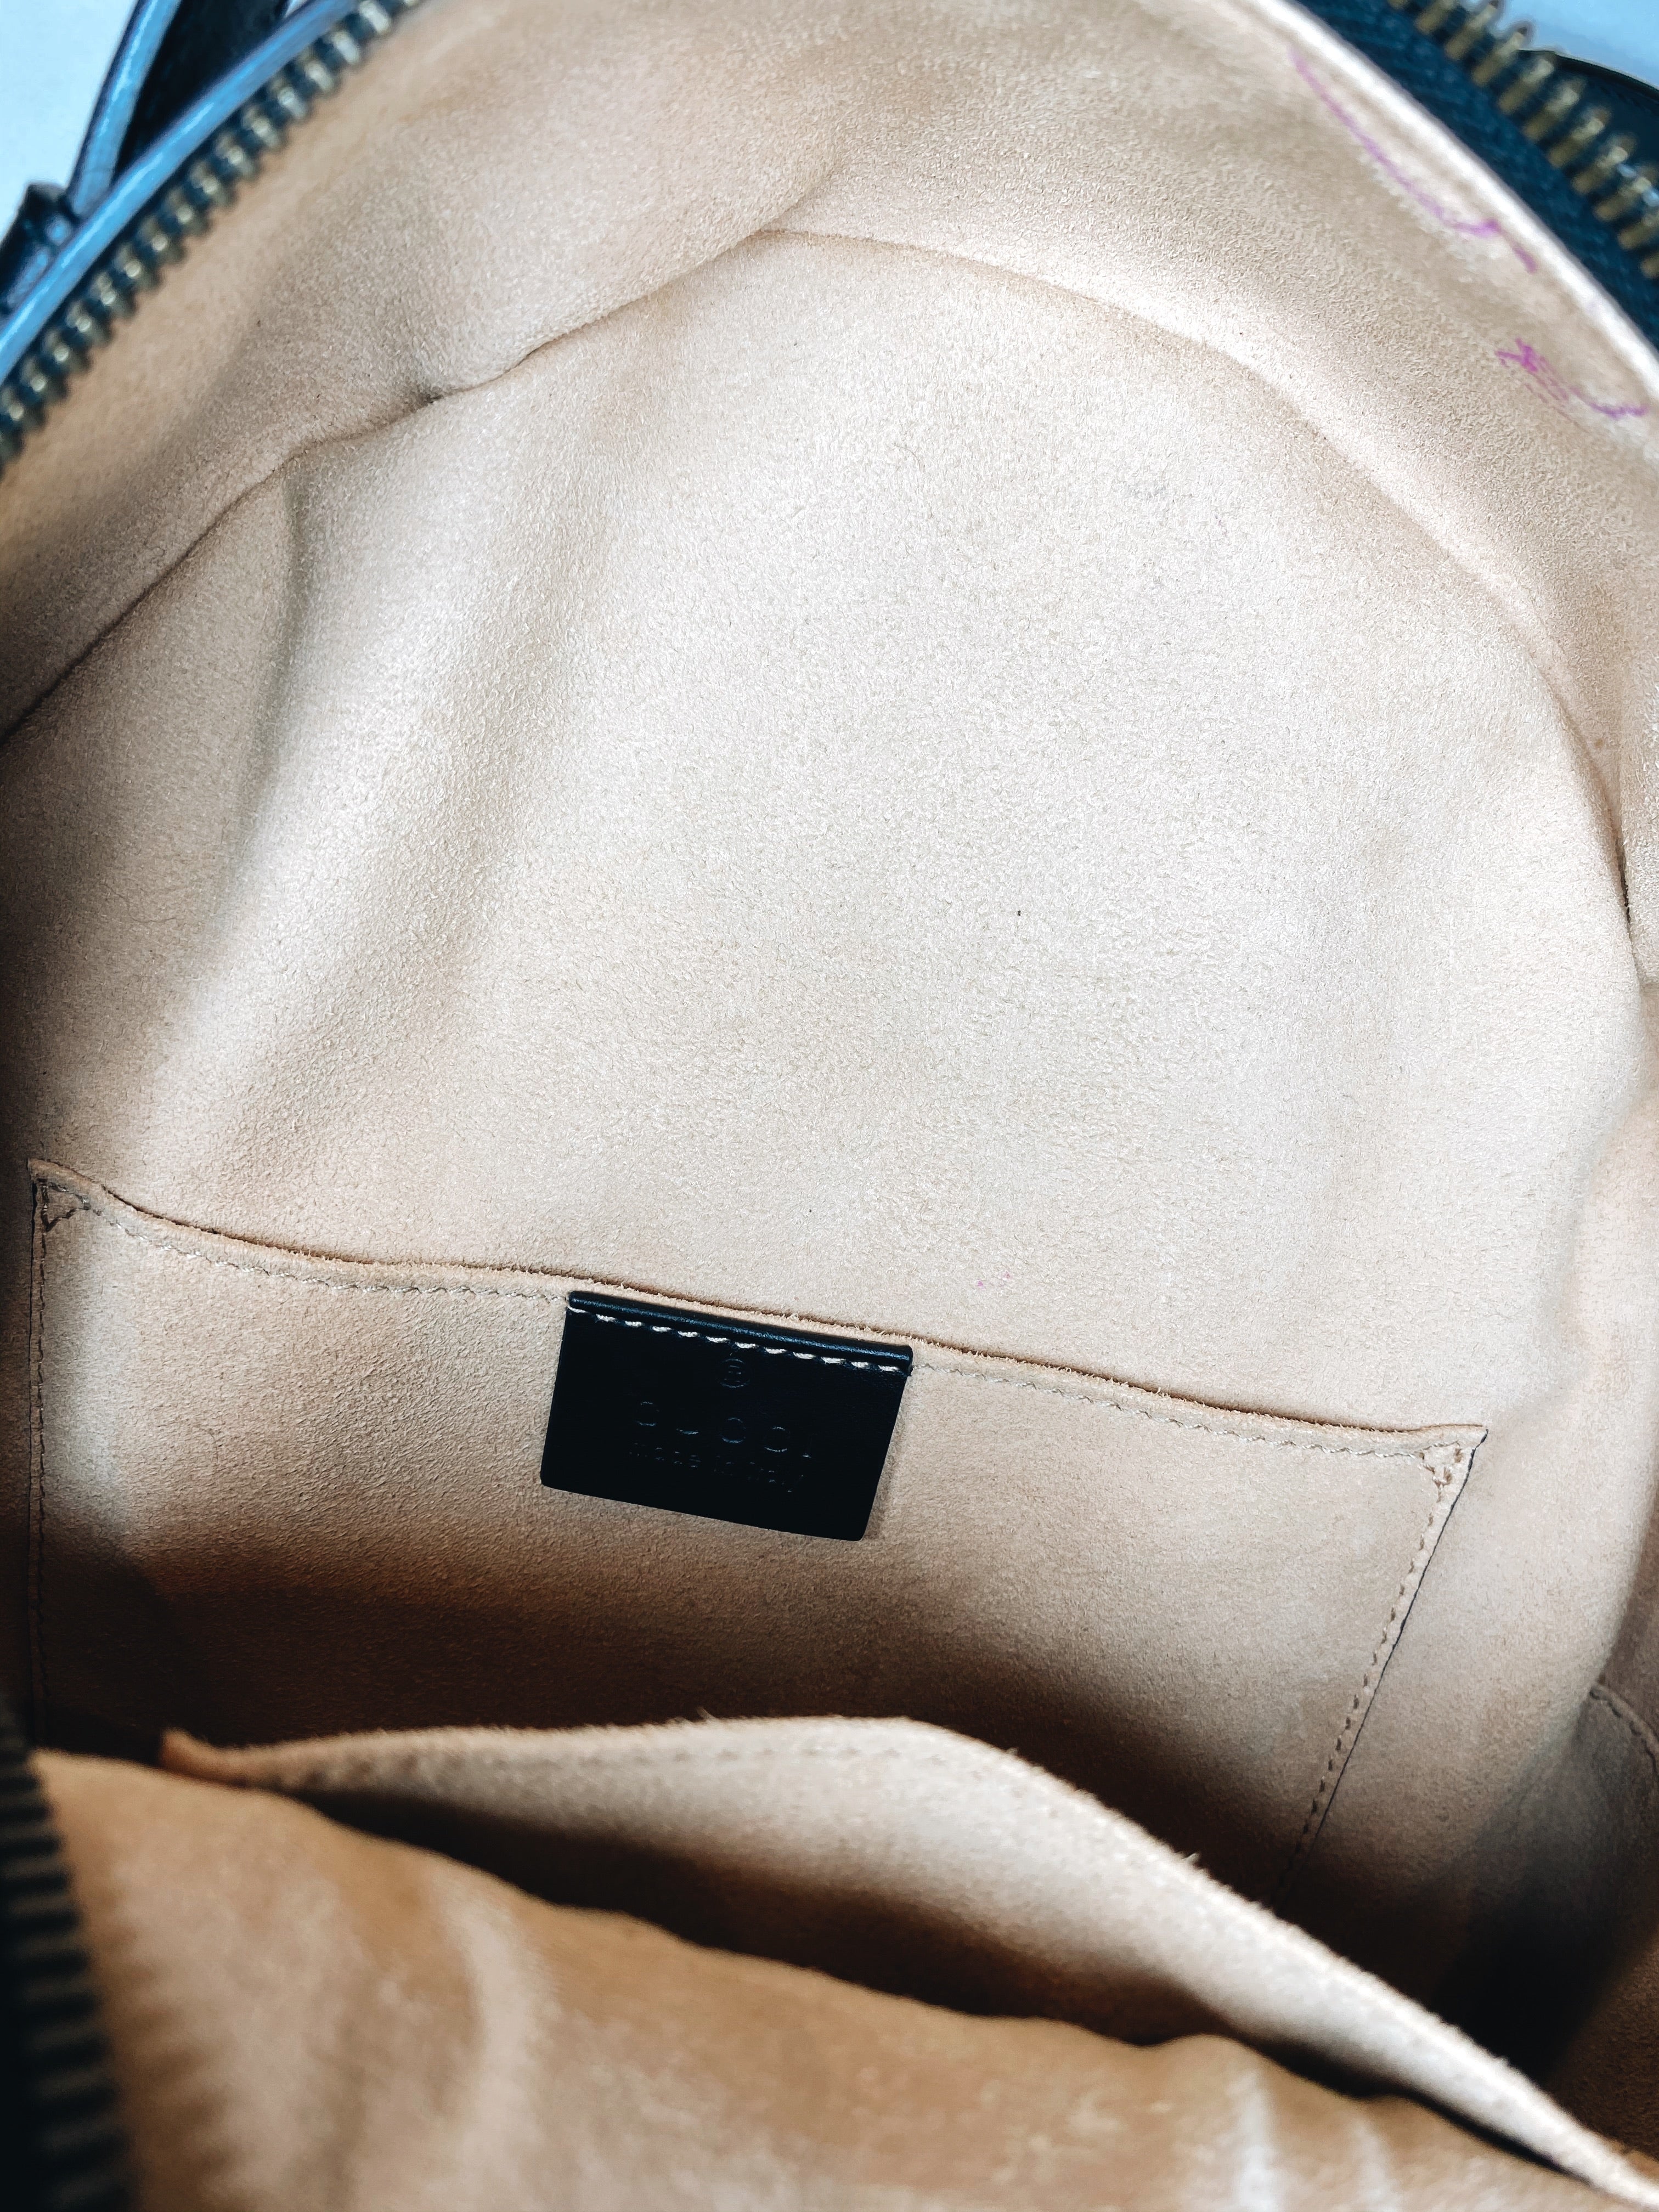 Vintage Gucci GG Marmount Matelasse Backpack